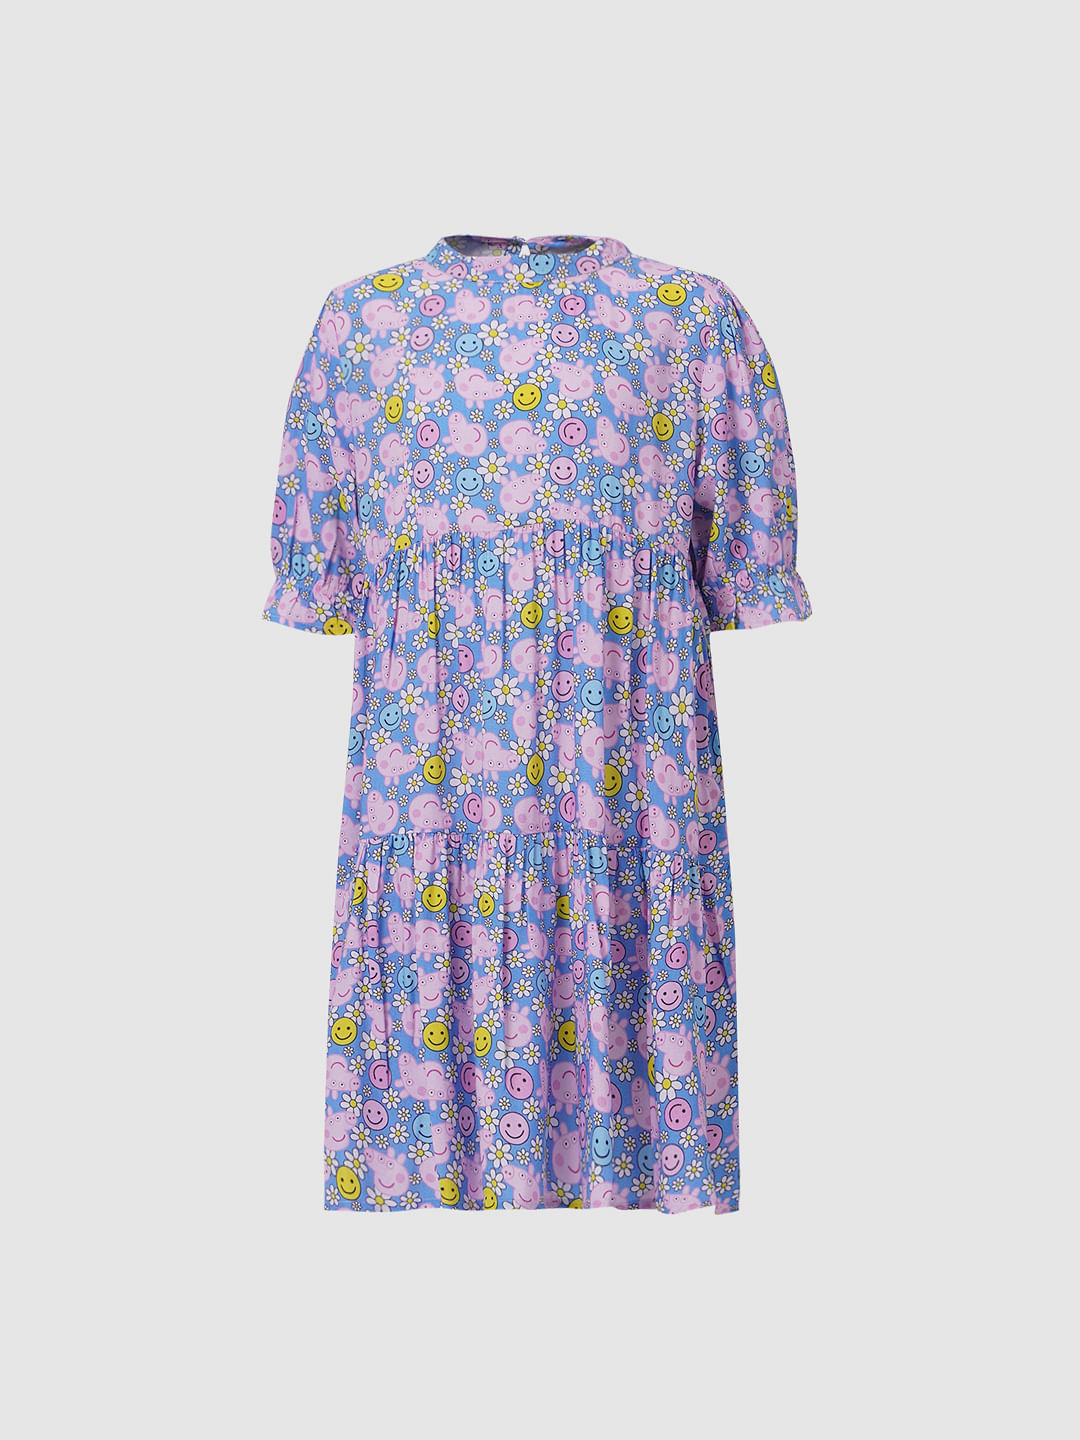 Peppa Pig Dress | Target Australia